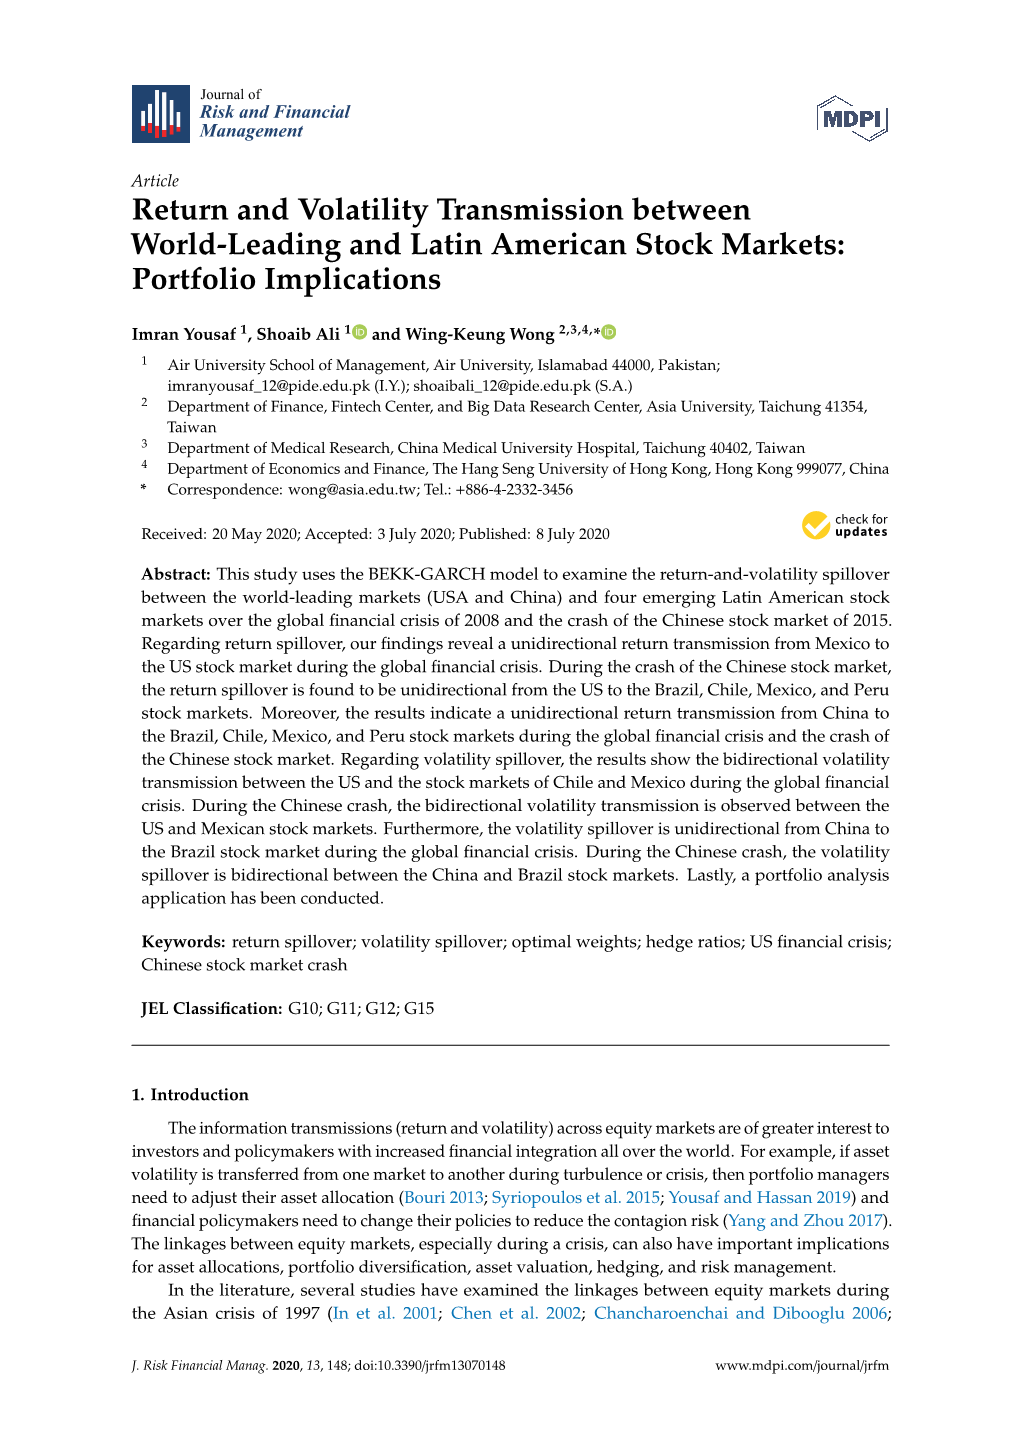 Return and Volatility Transmission Between World-Leading and Latin American Stock Markets: Portfolio Implications